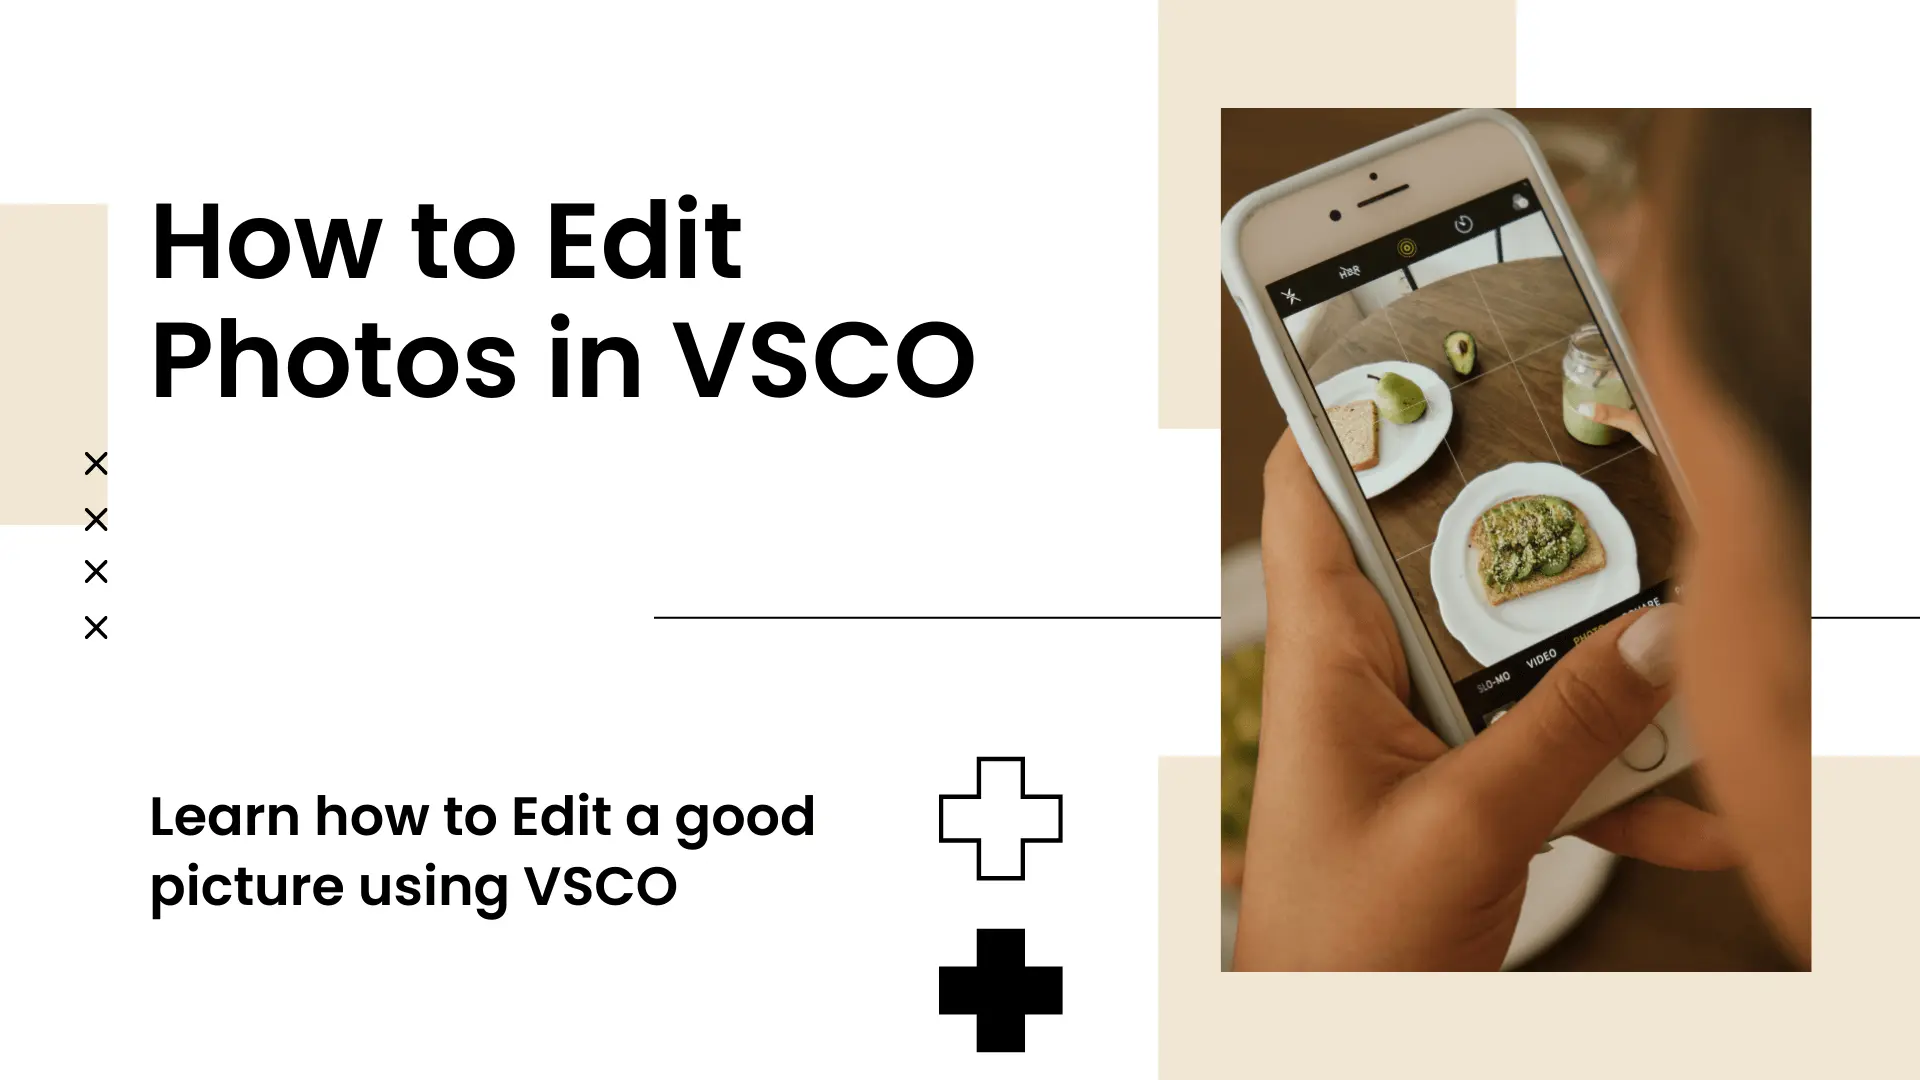 How to edit Photos in VSCO